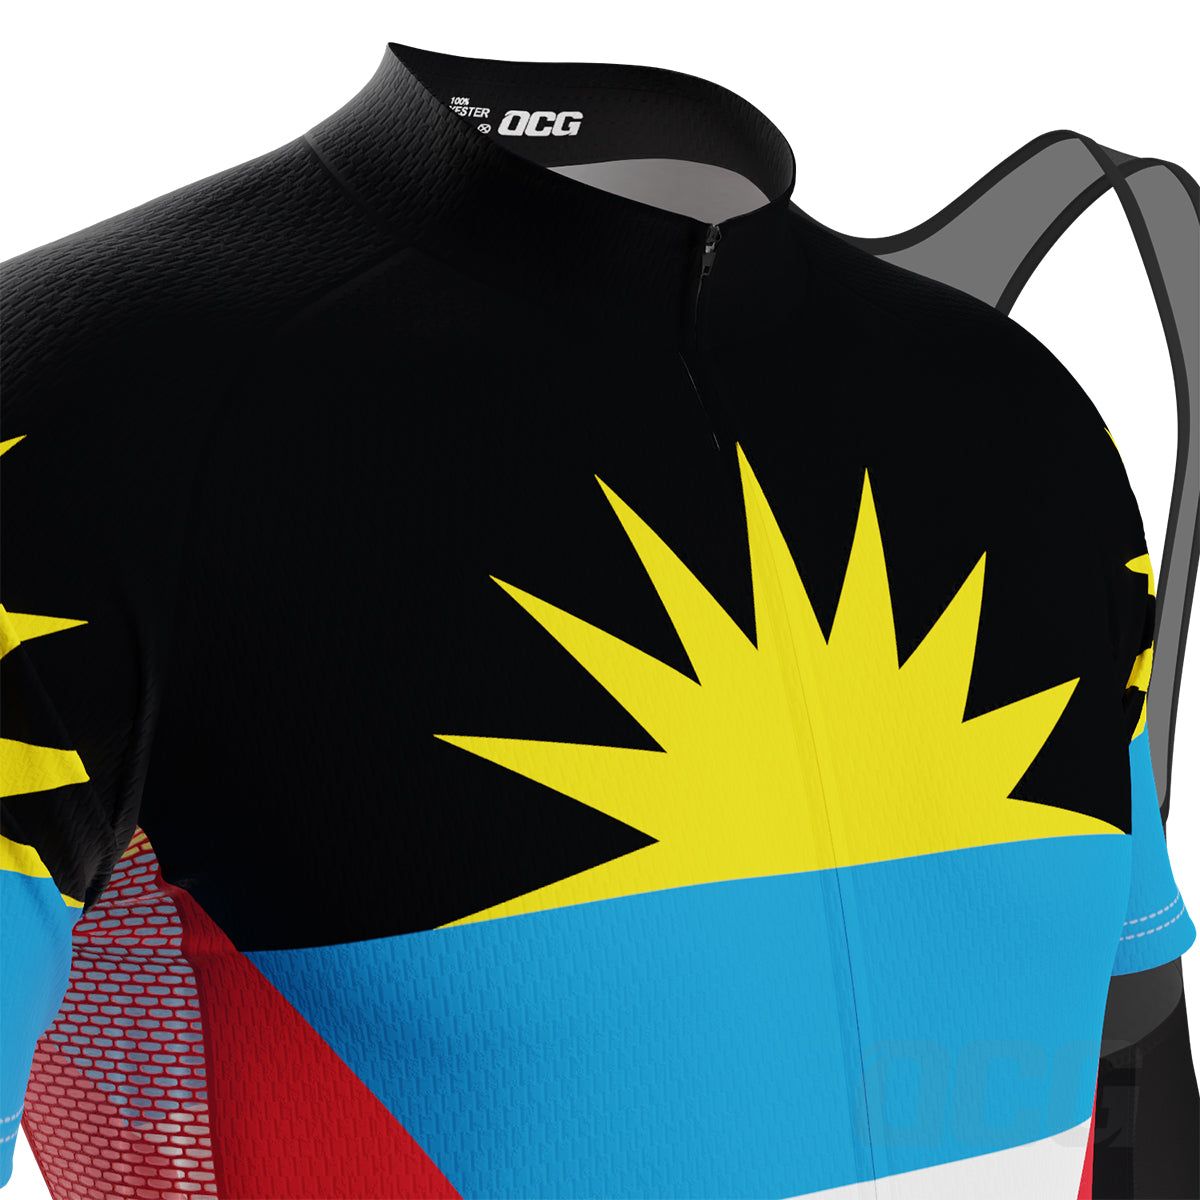 Men's Antigua and Barbuda Short Sleeve Cycling Kit